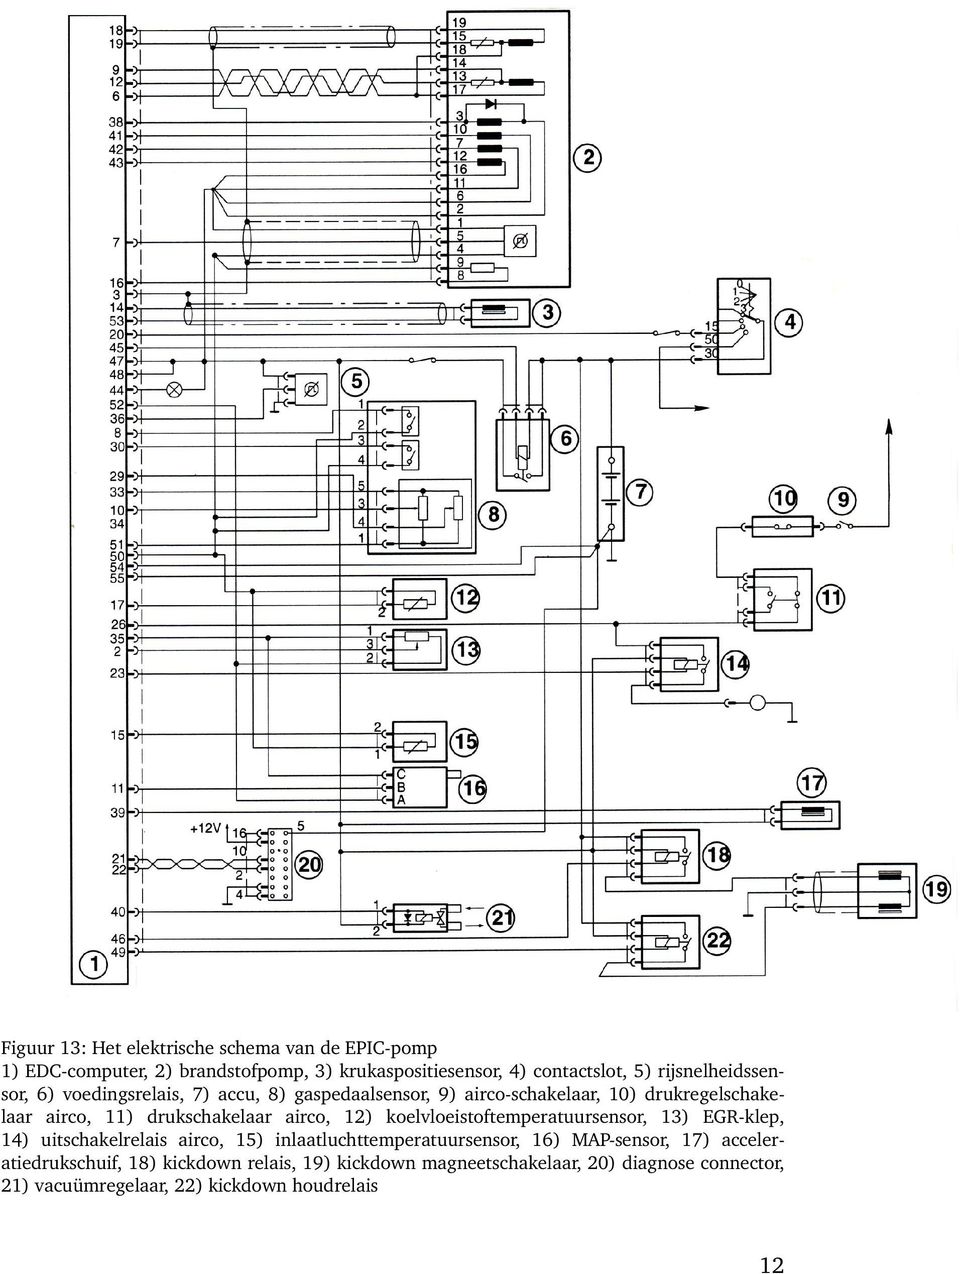 airco, 12) koelvloeistoftemperatuursensor, 13) EGR-klep, 14) uitschakelrelais airco, 15) inlaatluchttemperatuursensor, 16) MAP-sensor, 17)